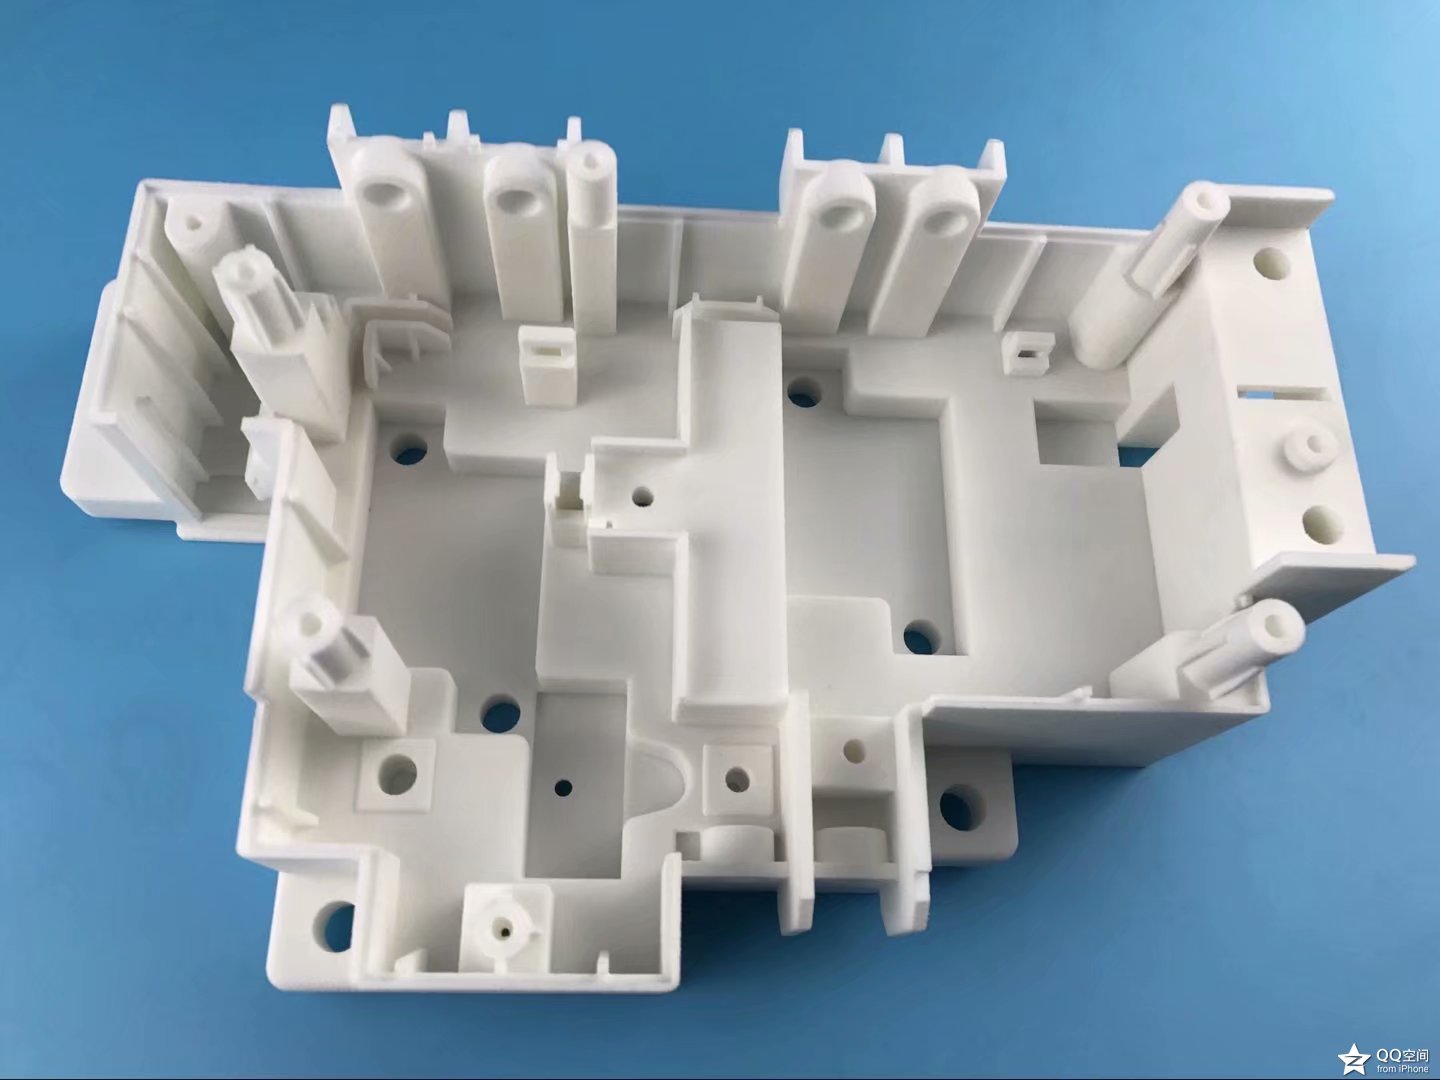 3D Printing SLA rapid prototyping